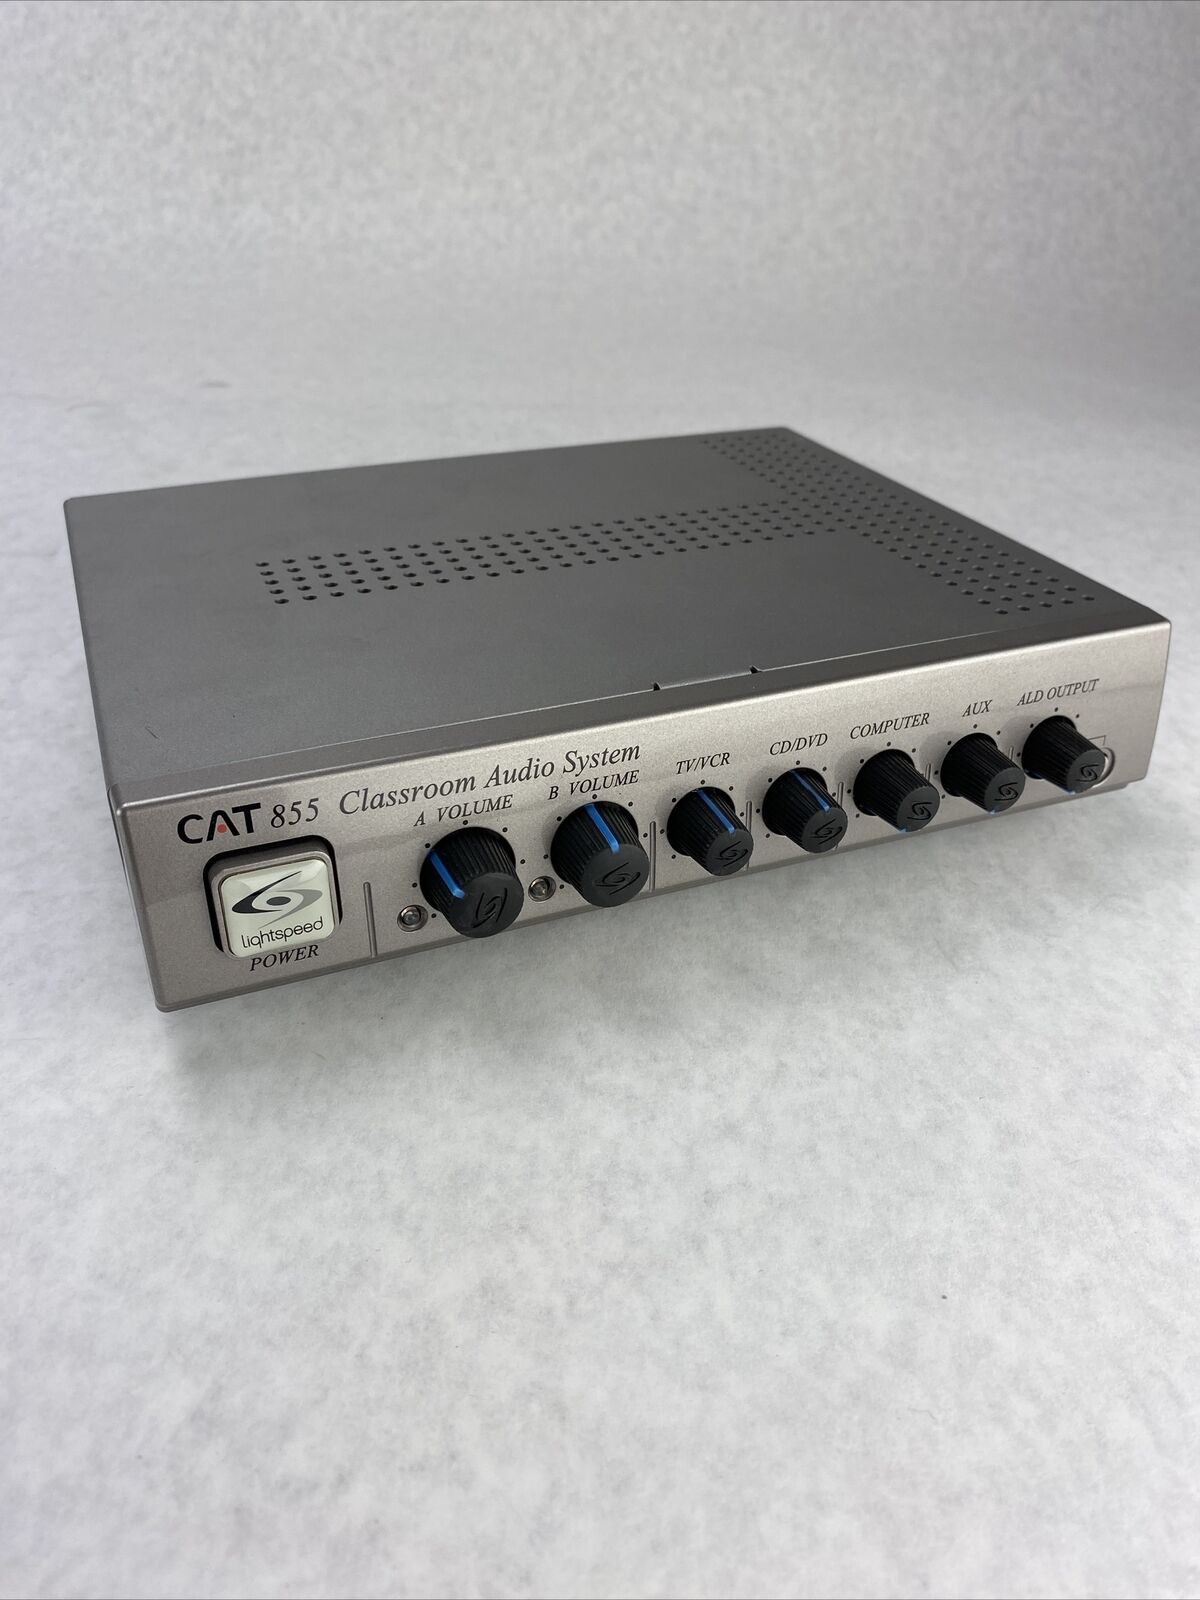 Lightspeed AMP-855 CAT855 Classroom Audio System - Untested